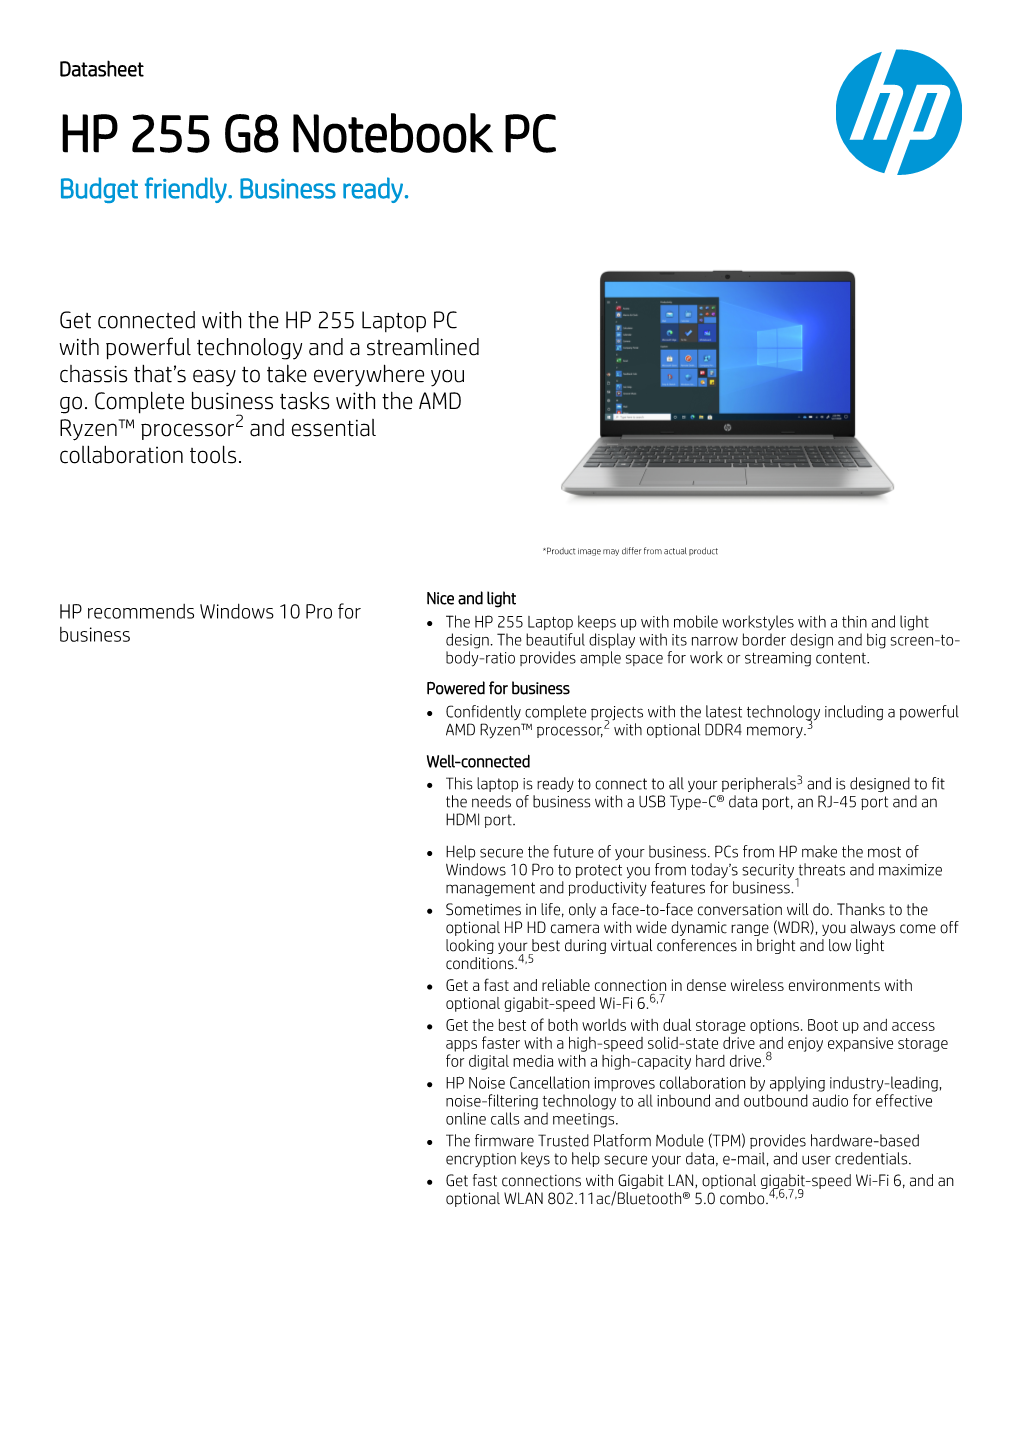 HP 255 G8 Notebook PC Budget Friendly